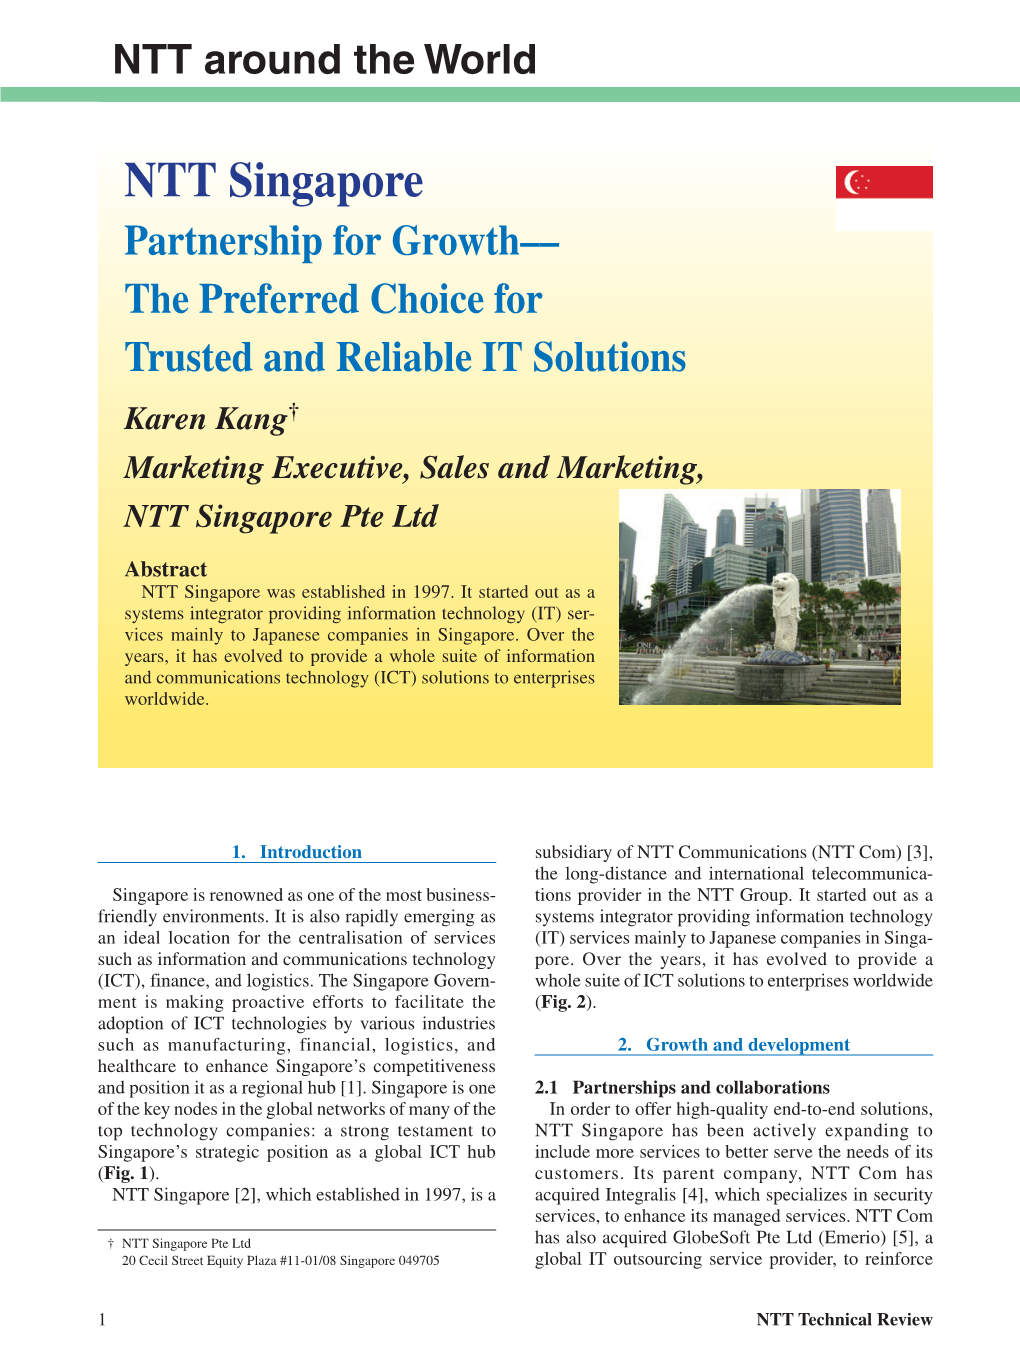 NTT Technical Review, Nov. 2011, Vol. 9, No. 11